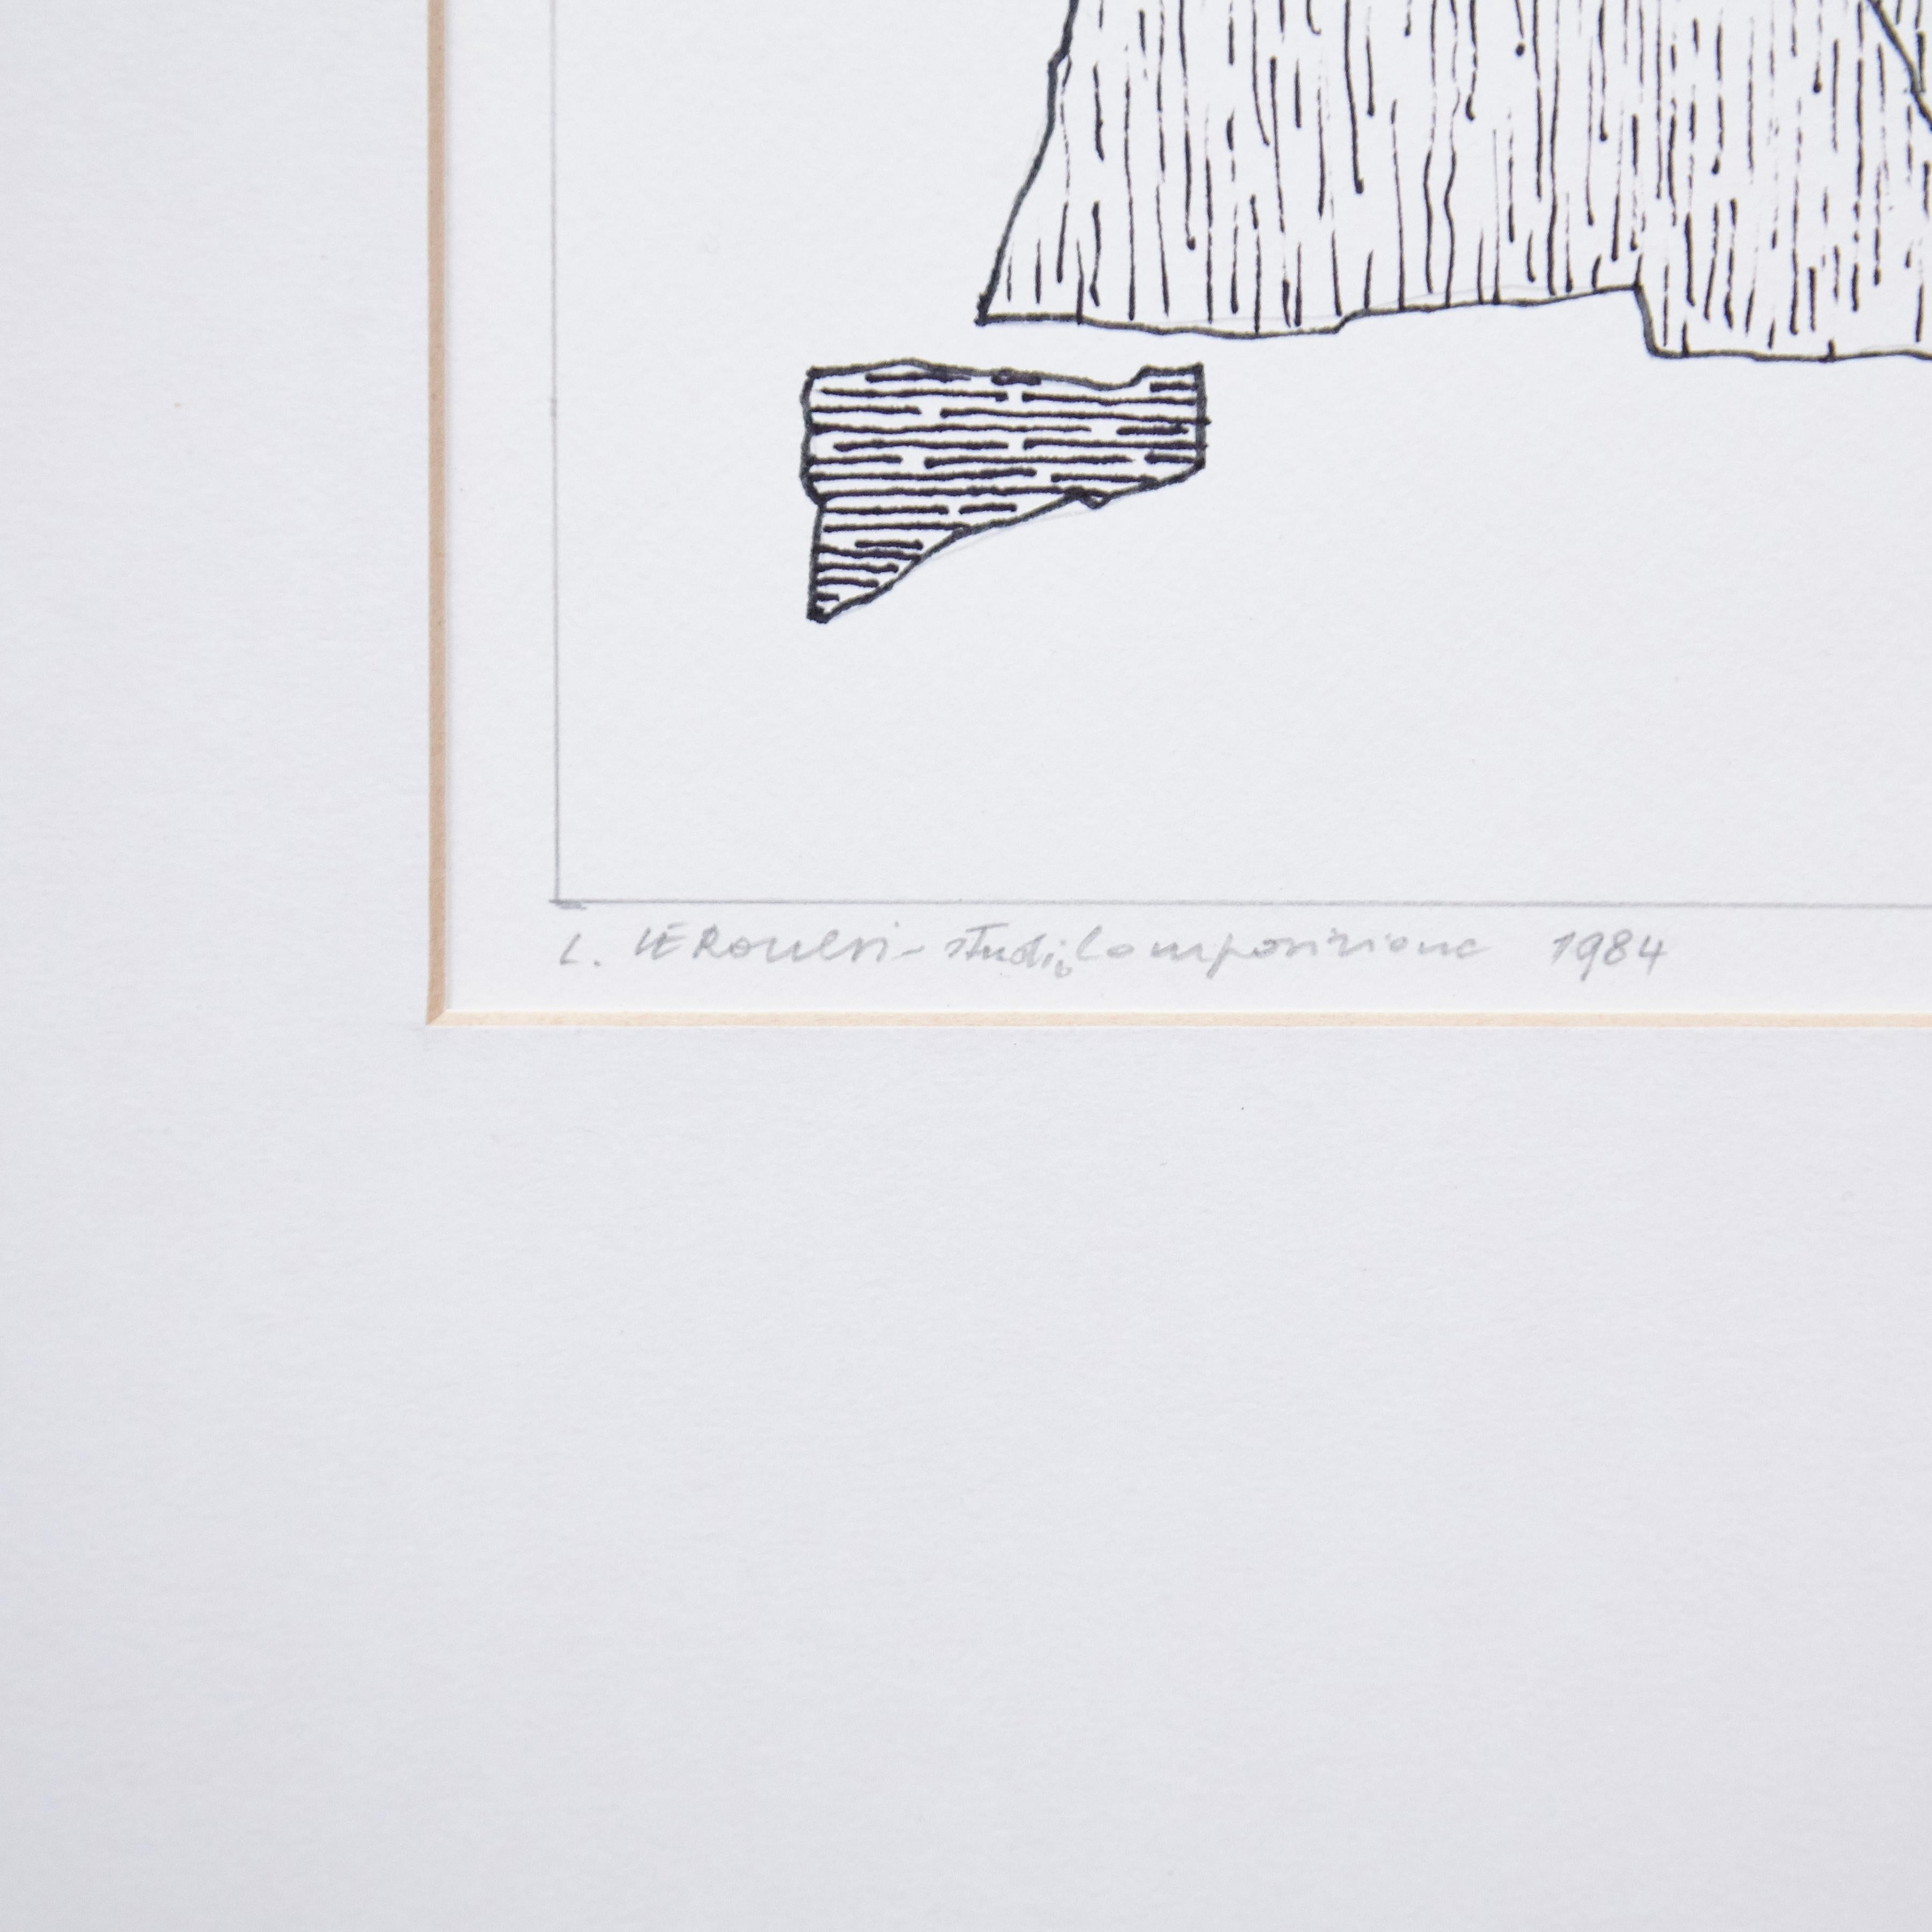 'Composizione' original drawing by Luigi Veronesi, circa 1984.

Crayon on paper.

In original good condition.

Luigi Veronesi (1908-1998) was an Italian photographer, painter, scenographer and film director. Veronesi was a polyvalent and